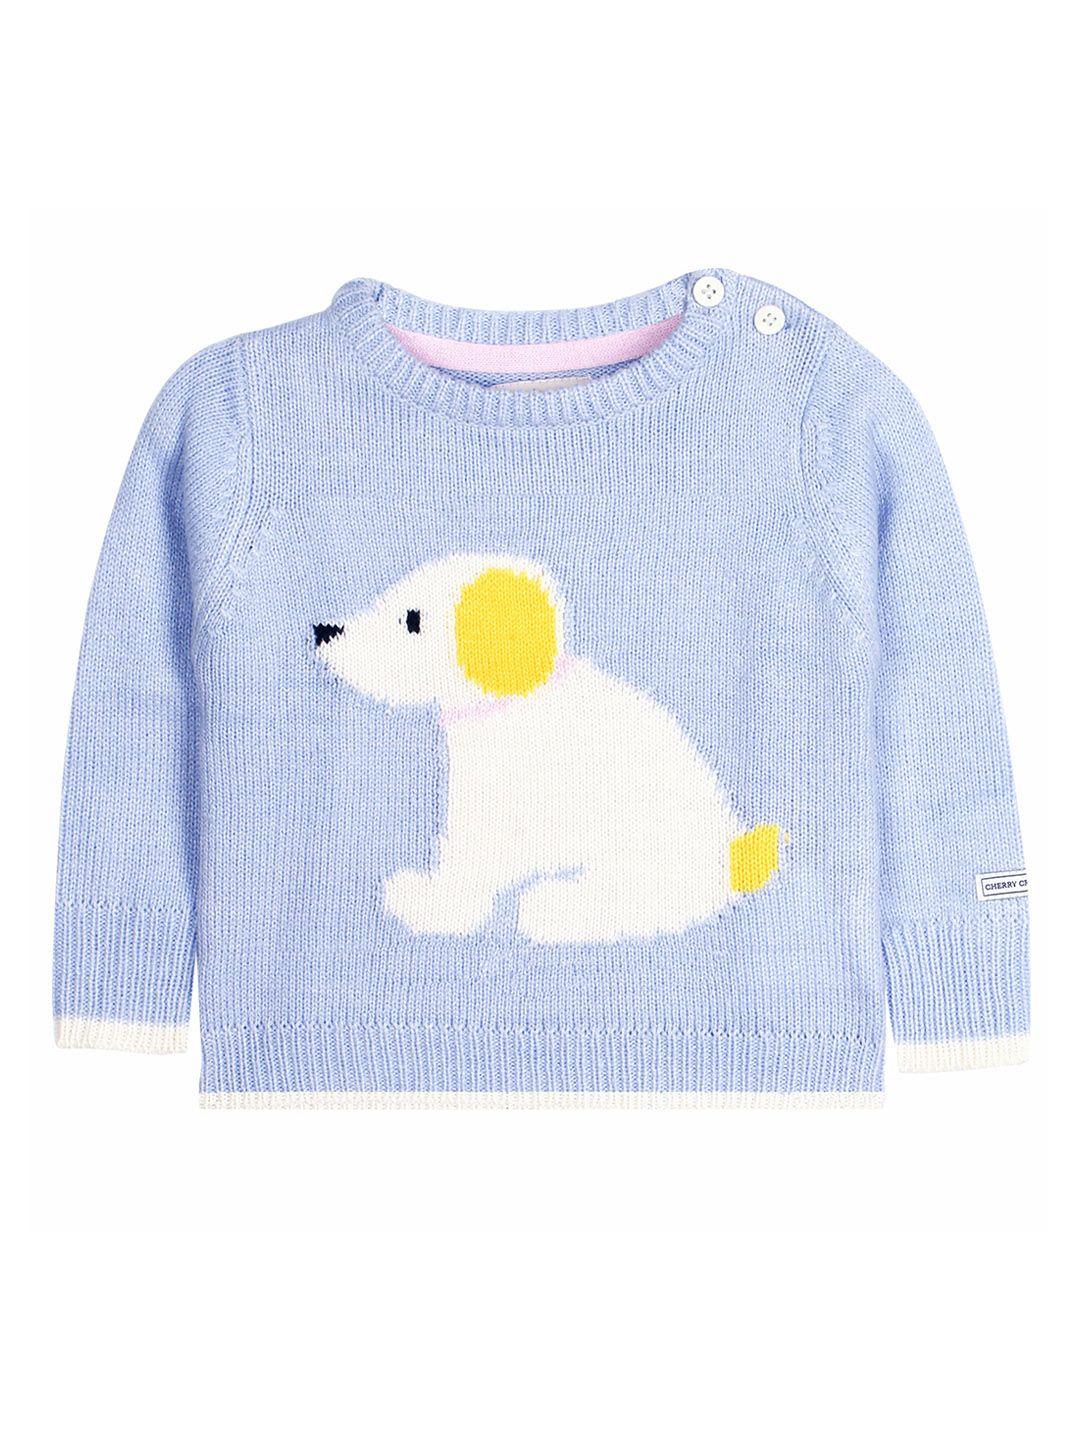 cherry crumble unisex kids blue self-design sweater